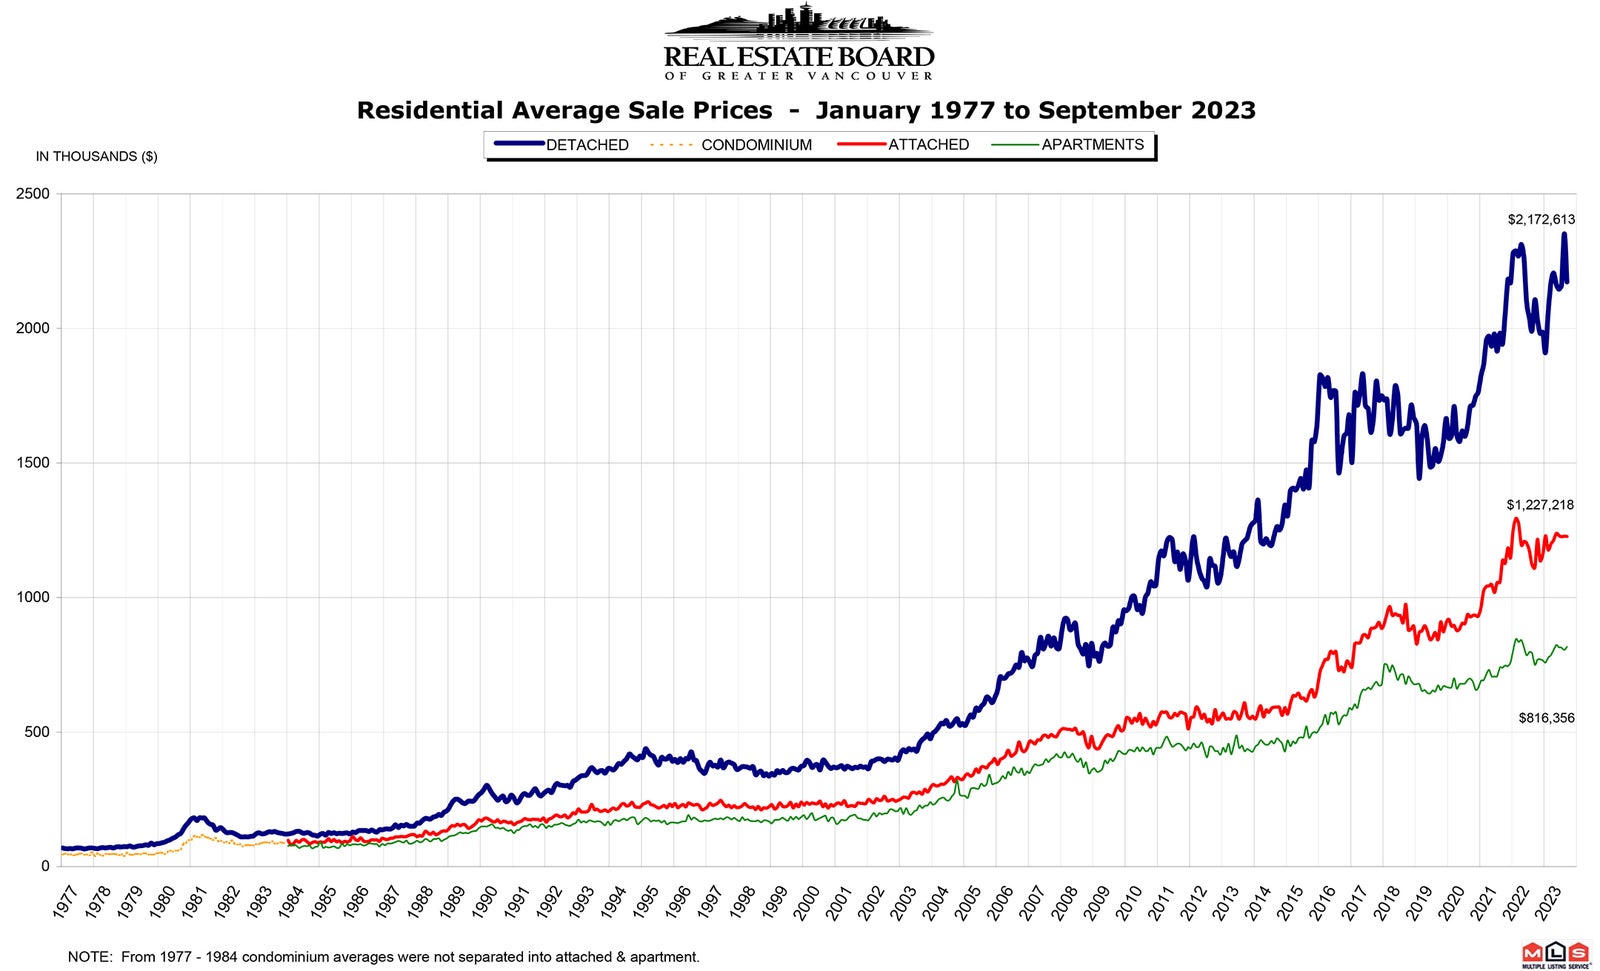 Residential Average Sale Price RASP September 2023 Real Estate Vancouver Chris Frederickson